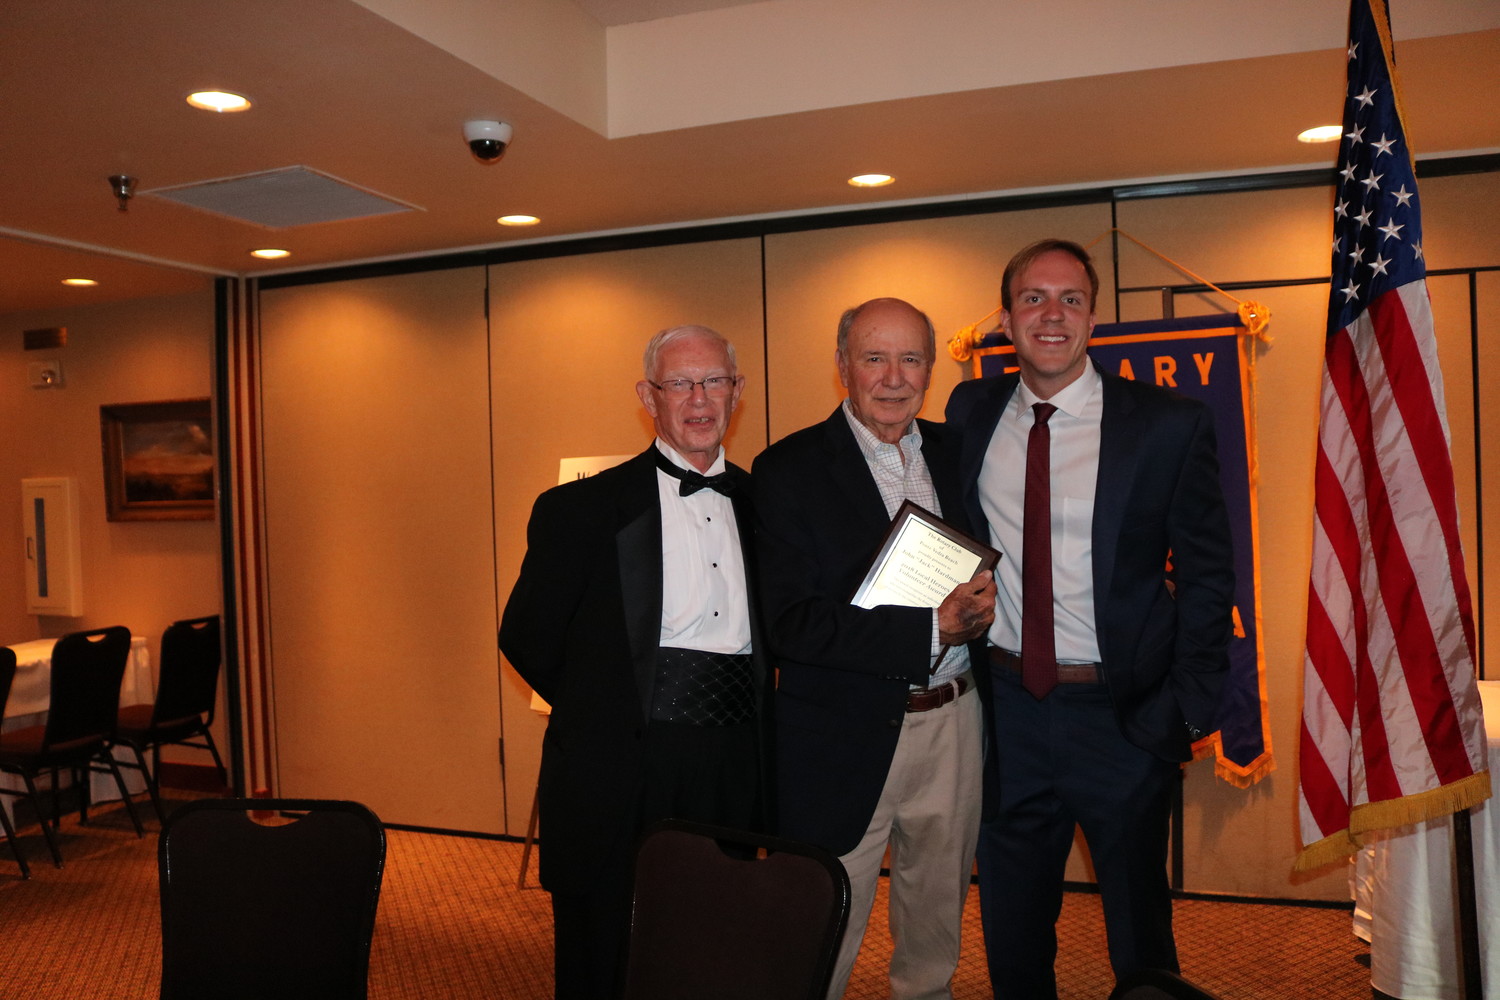 John “Jack” Hardman (center) receives the Volunteer Award from Ponte Vedra Recorder Editor Jon Blauvelt (right) and Rotarian Chuck Day (left).